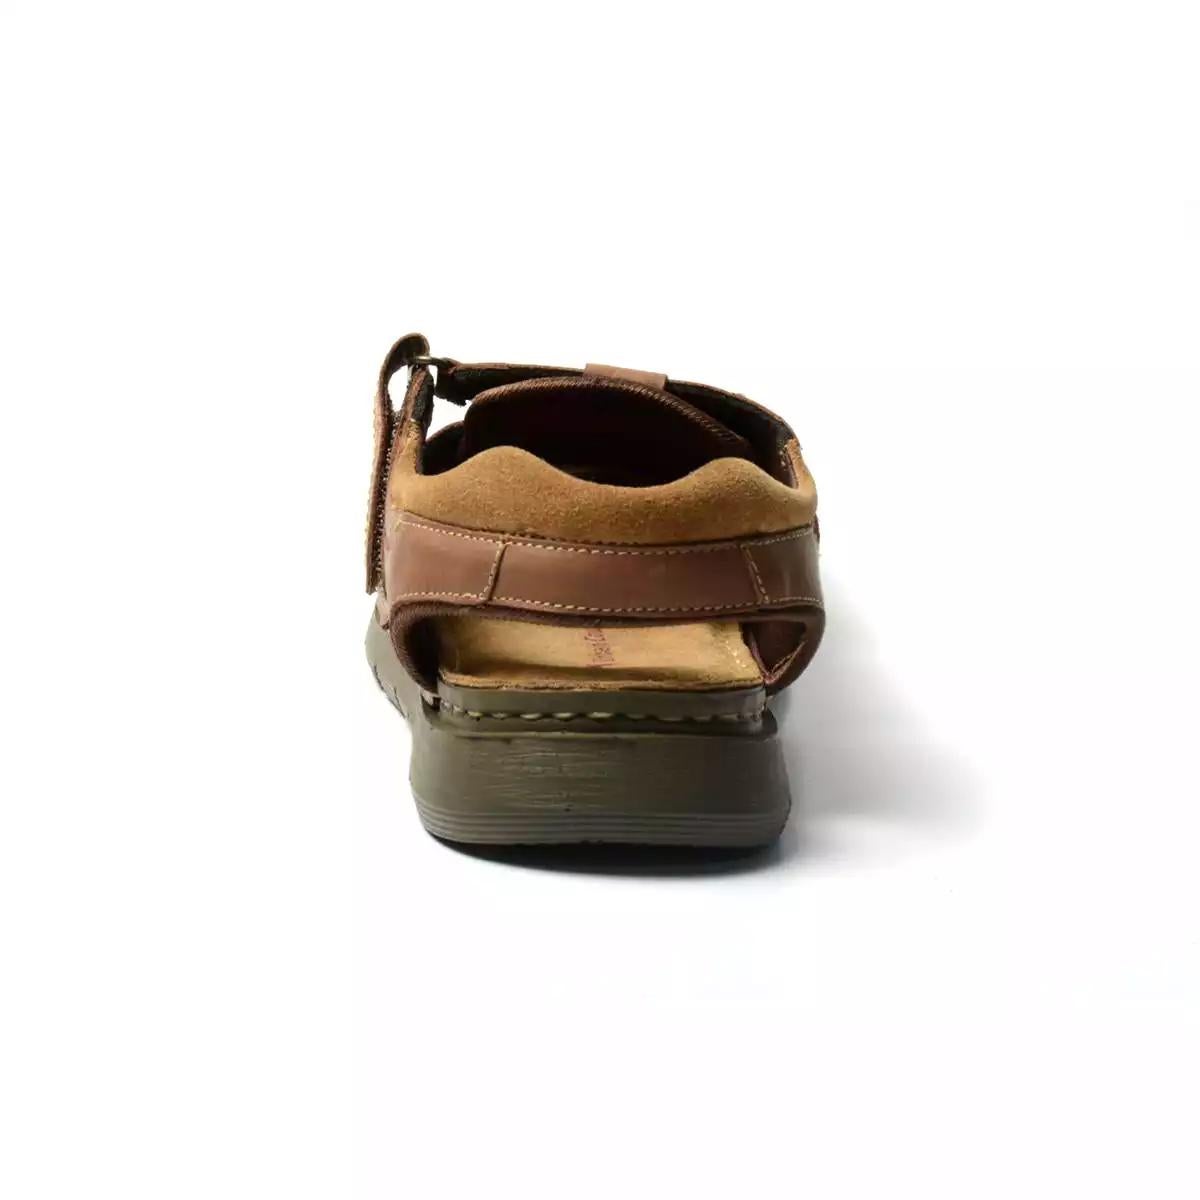 Men Leather Casual Sandals ǀ BORA 6076